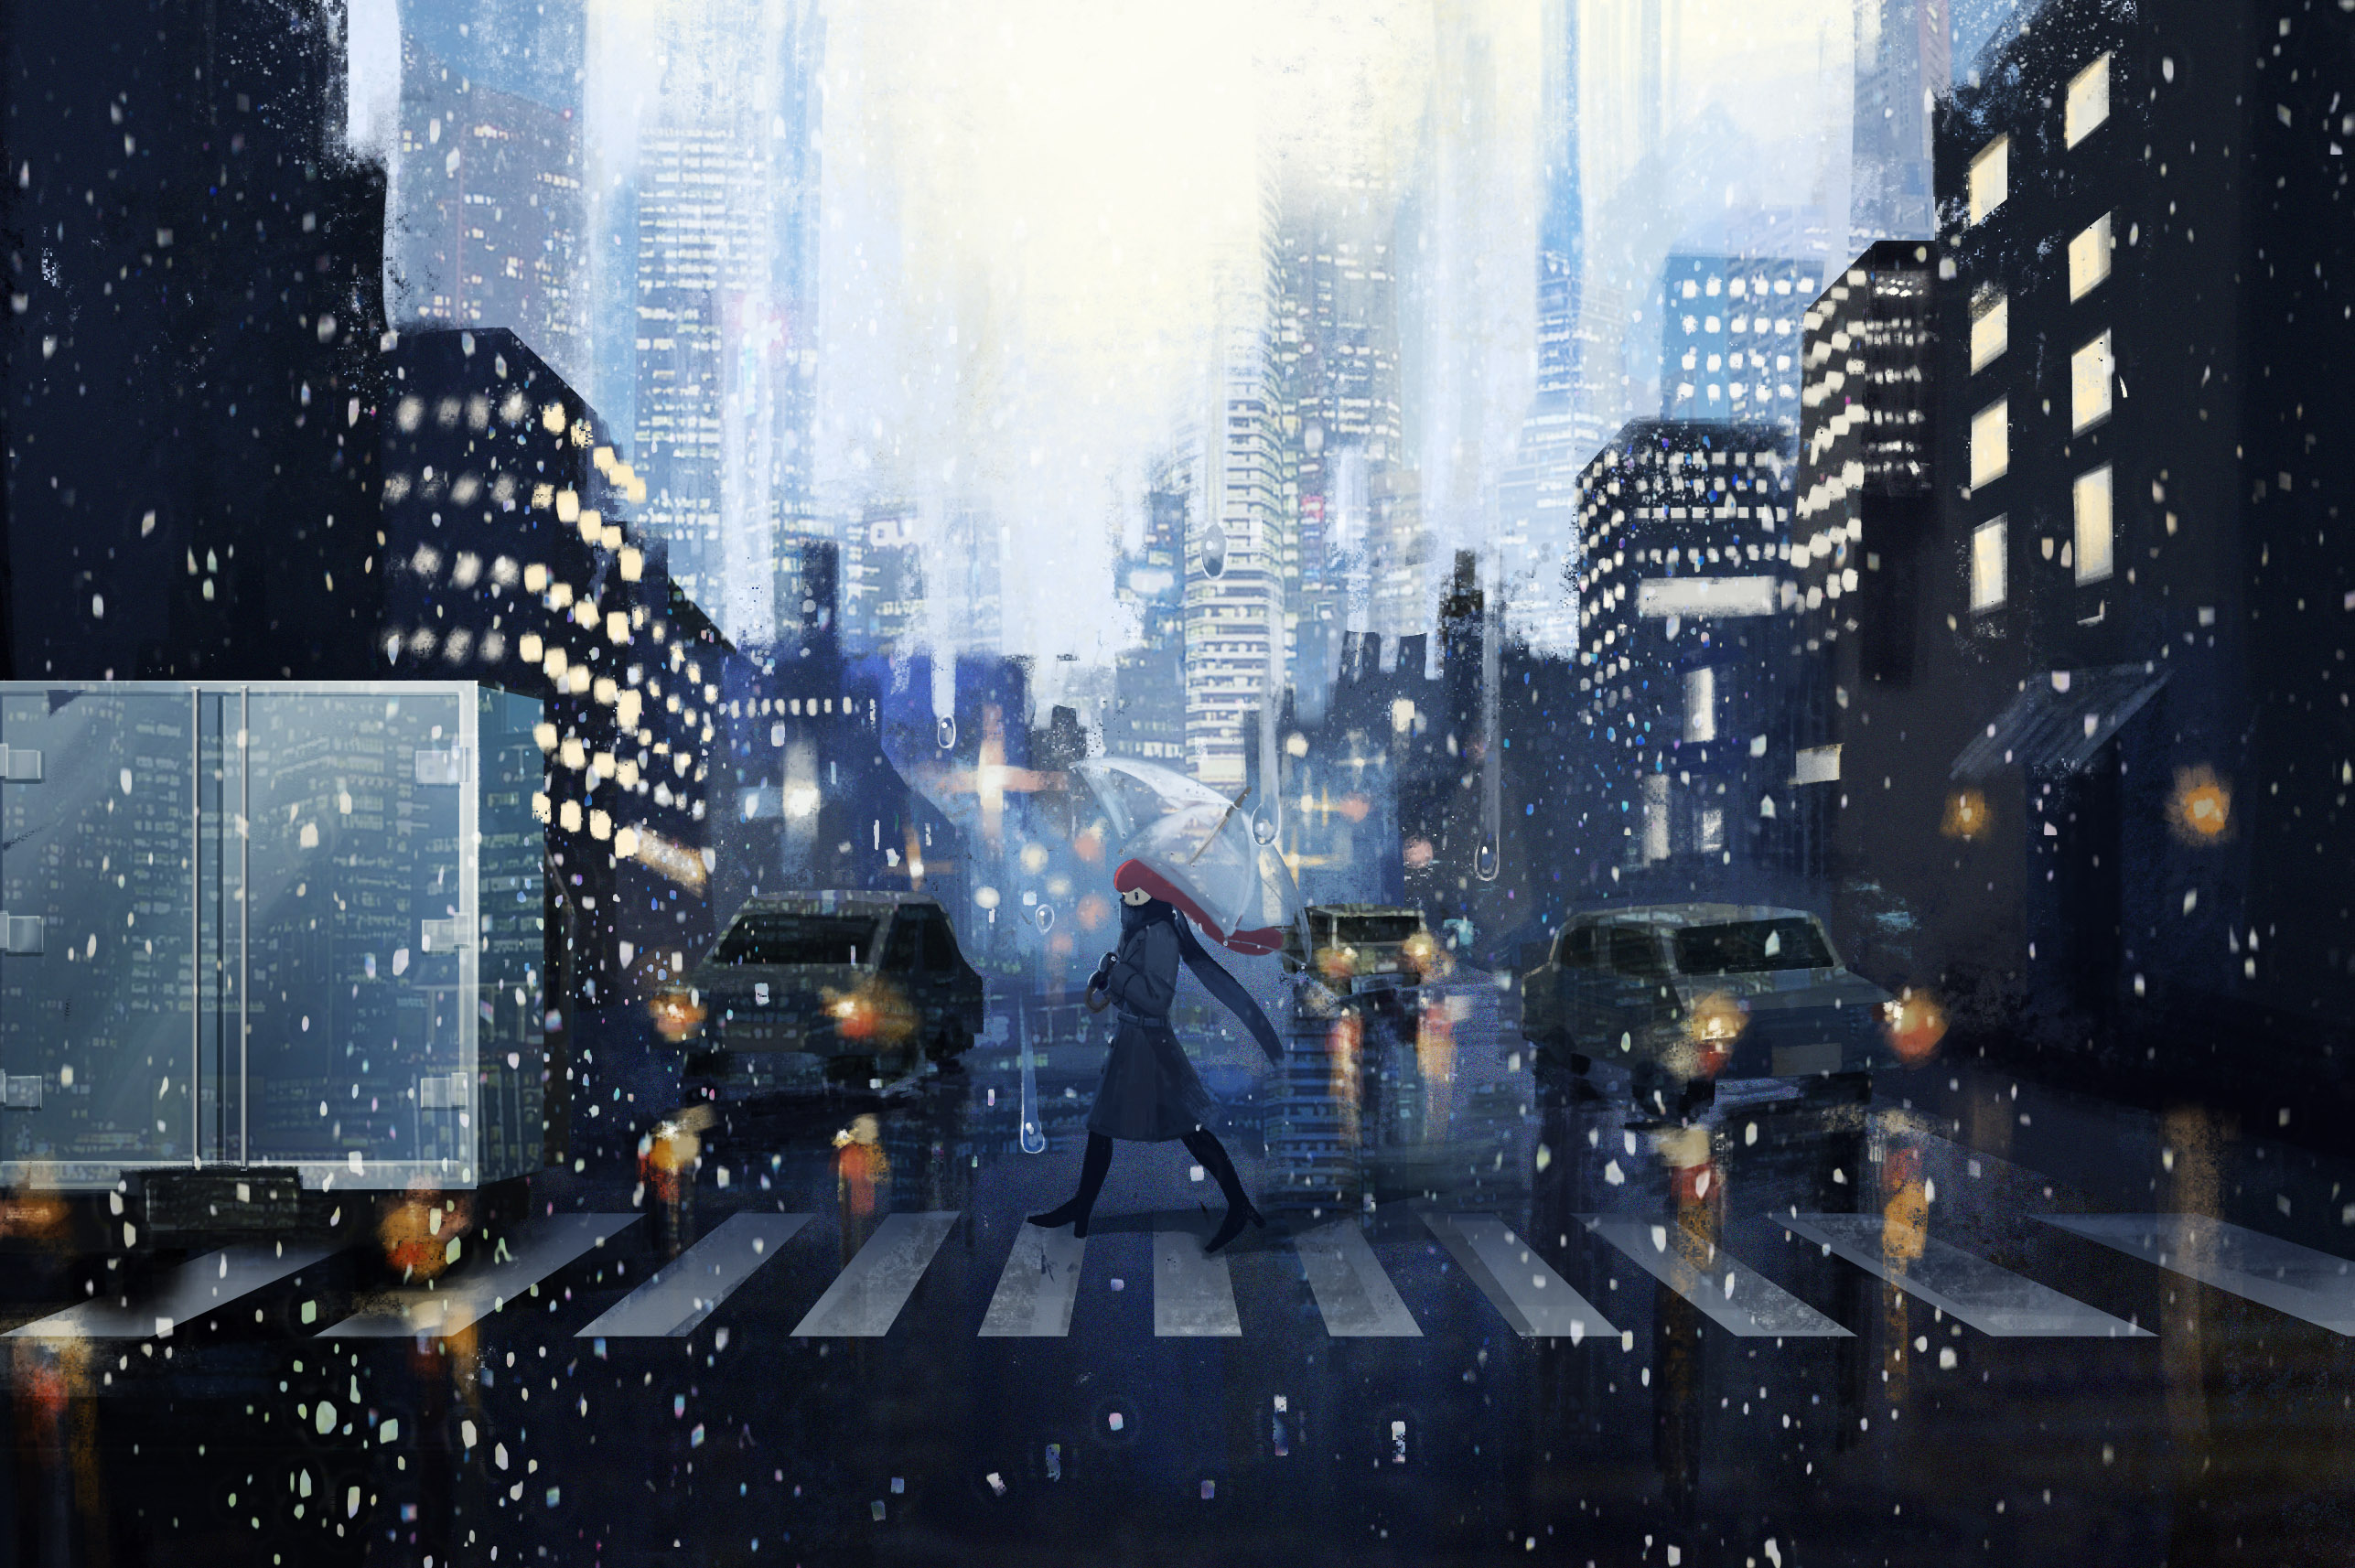 Anime Girl Crossing the Road in the Rain by kurisick HD Wallpaper